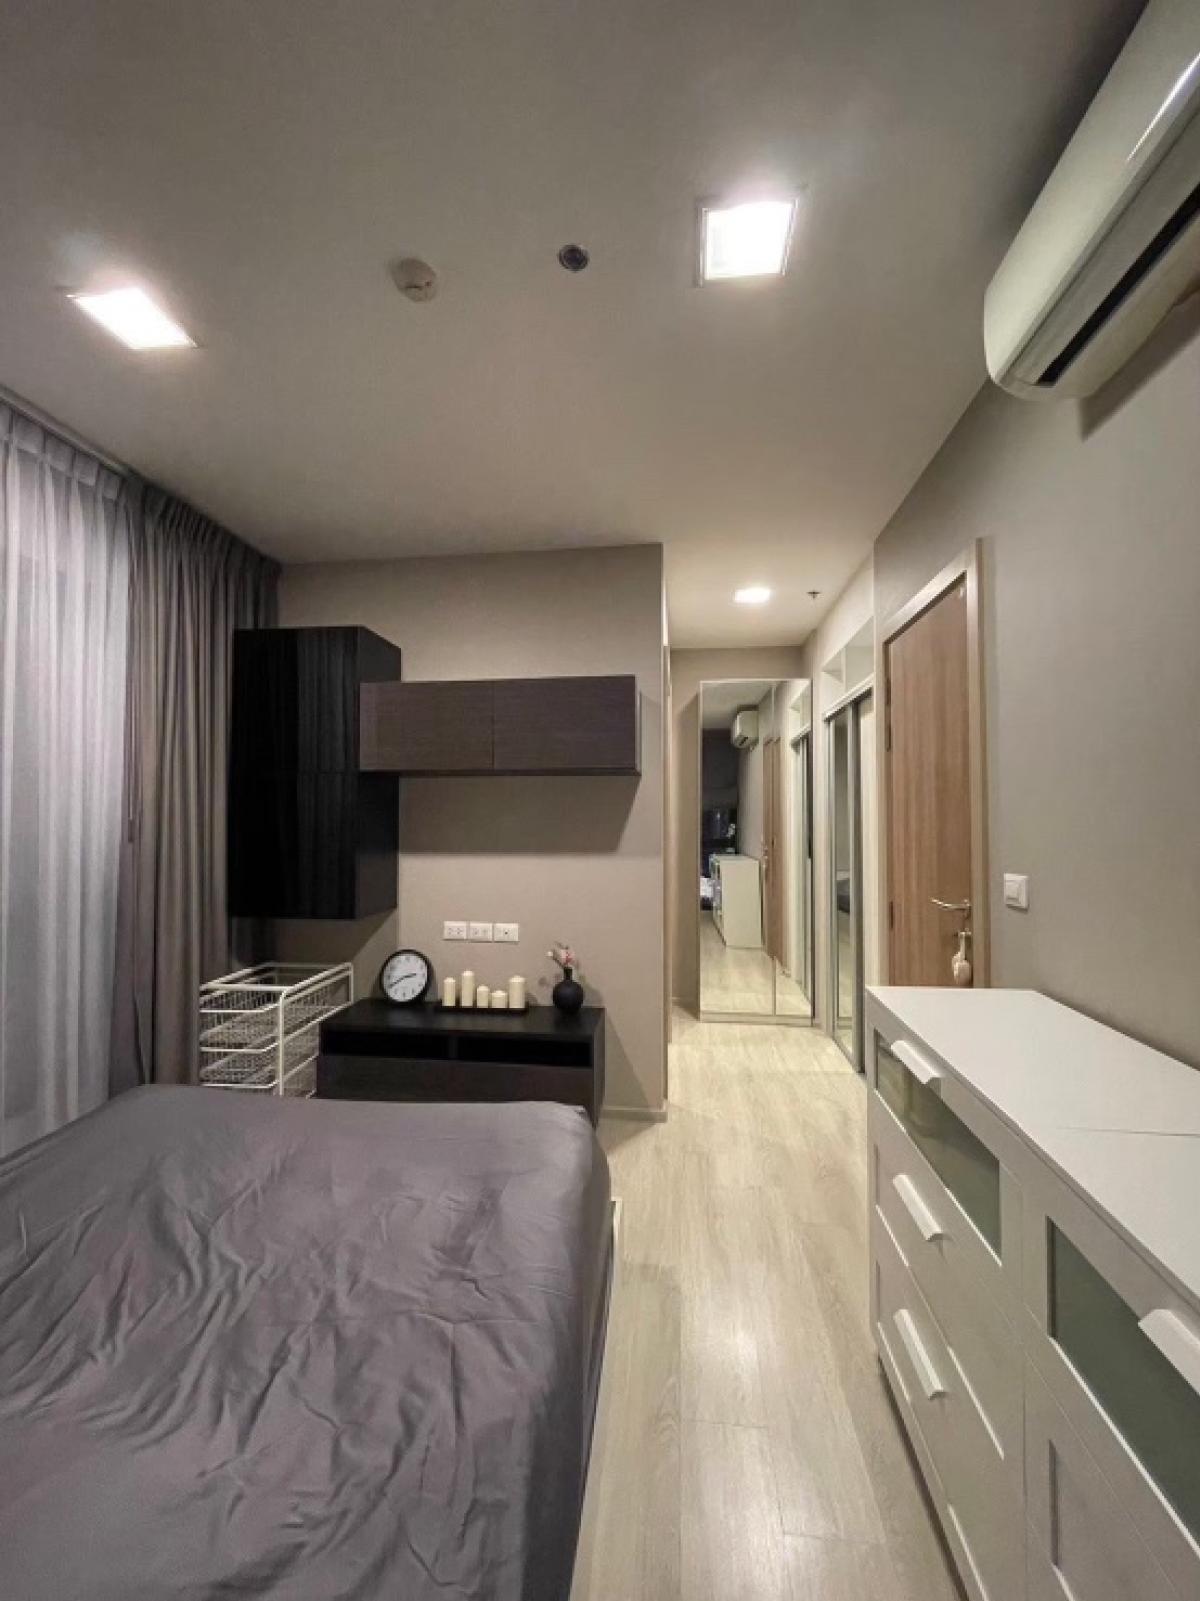 For RentCondoRama9, Petchburi, RCA : ✅ For rent Mist Rama 9, 1 bedroom, 1 bathroom, 35 sq m., 18,000 baht (ready to move in)